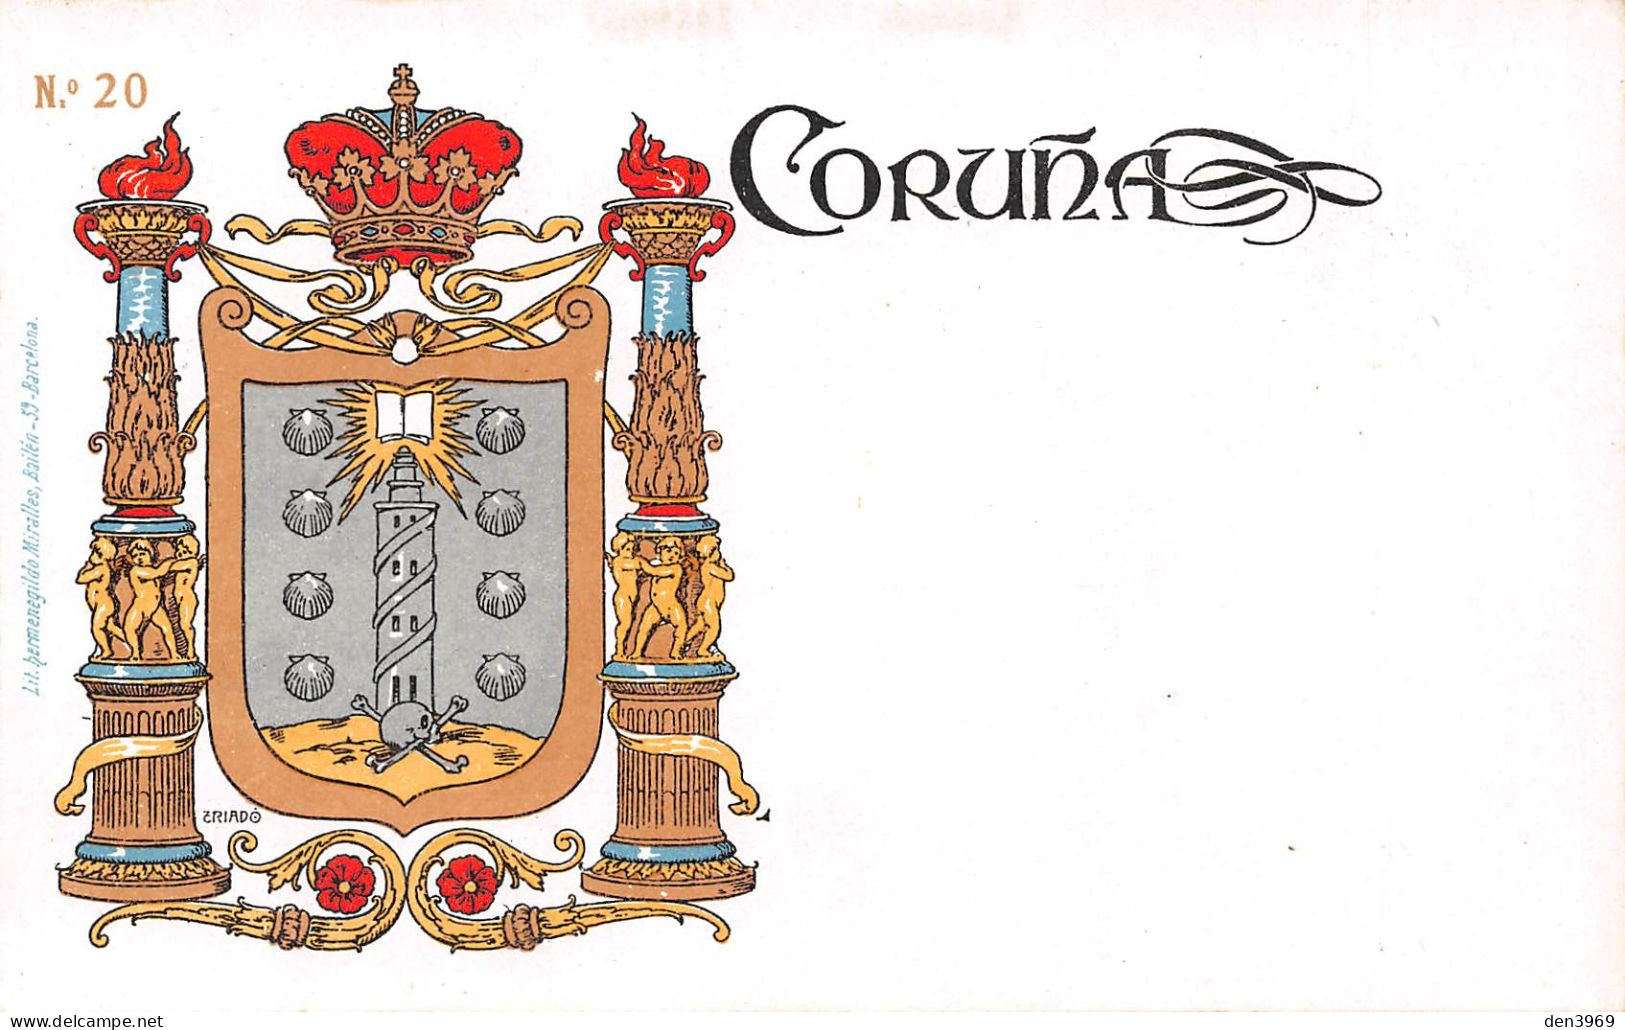 Espagne - CORUNA Par Eriado - Escudo De Armas, Armoiries - Lith. Hermenegildo Miralles, Barcelona N'20 - Précurseur - La Coruña